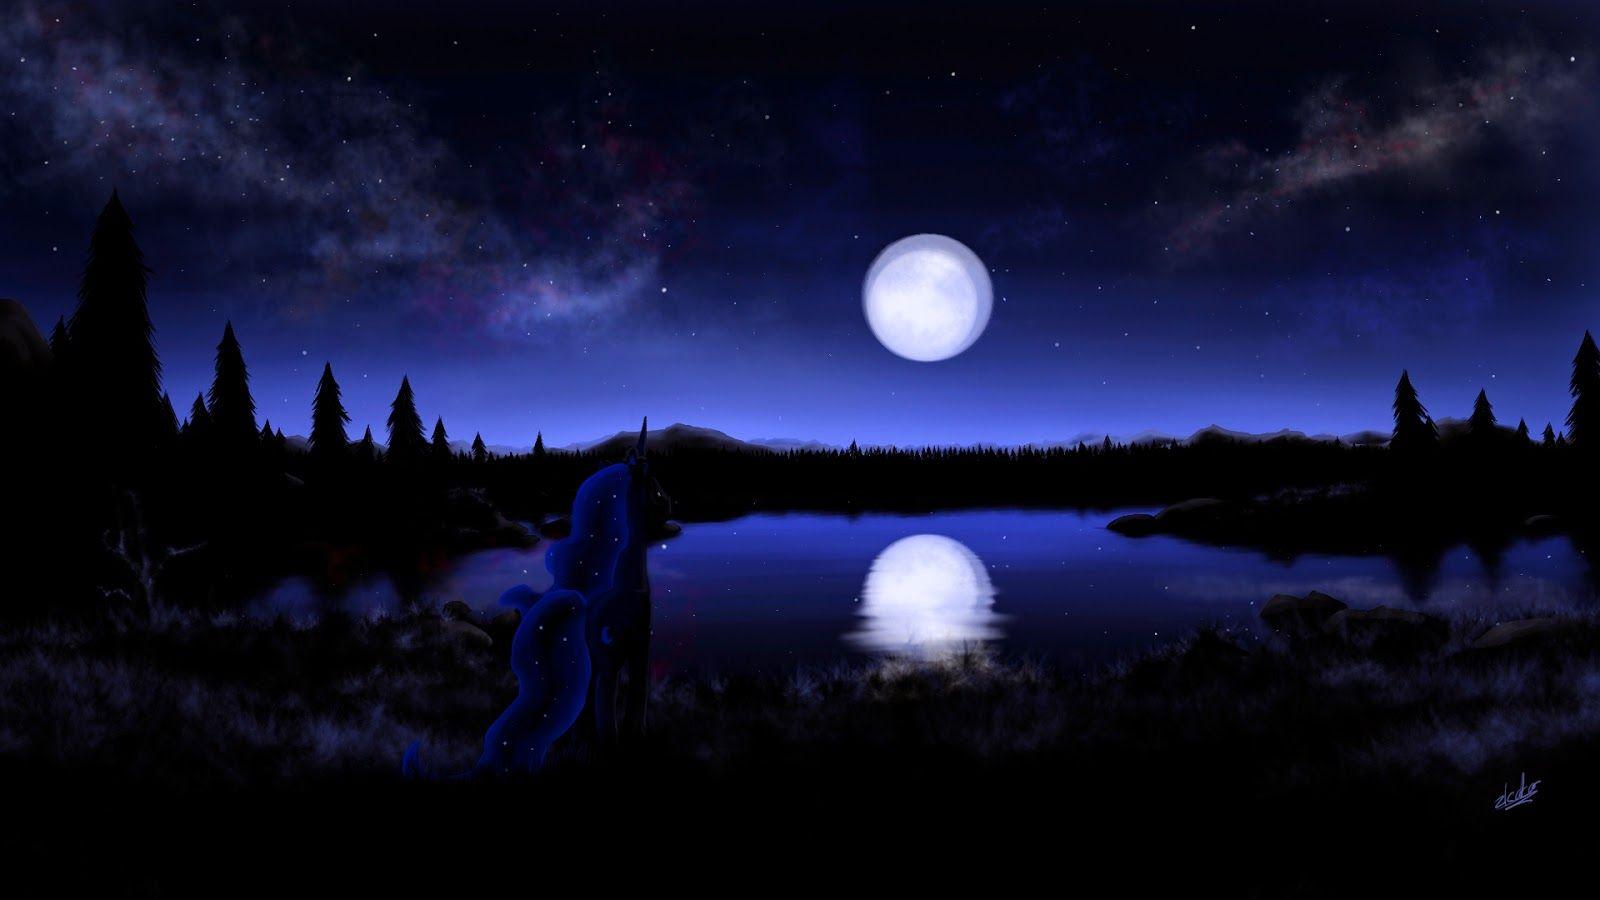 of moonlight at night sky near sea poetic nature image